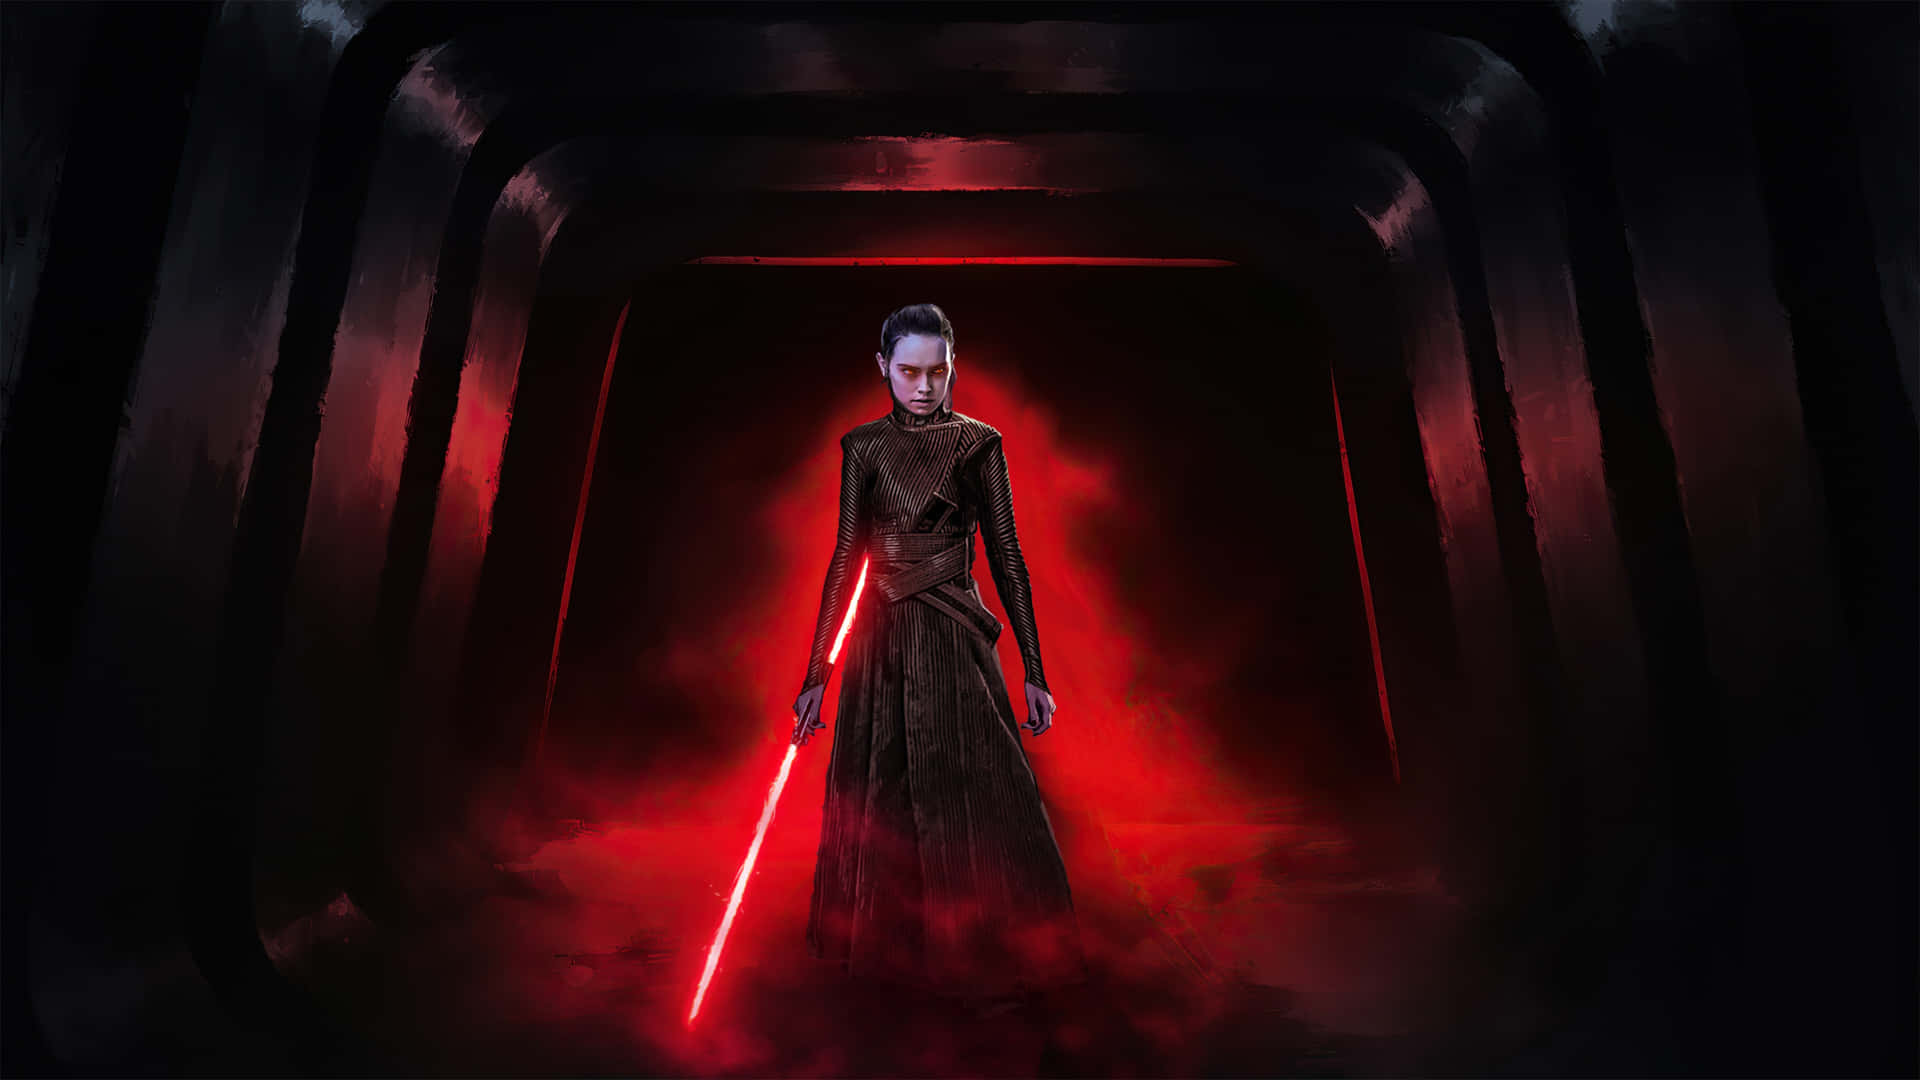 Dark So Powerful - Sith Lord